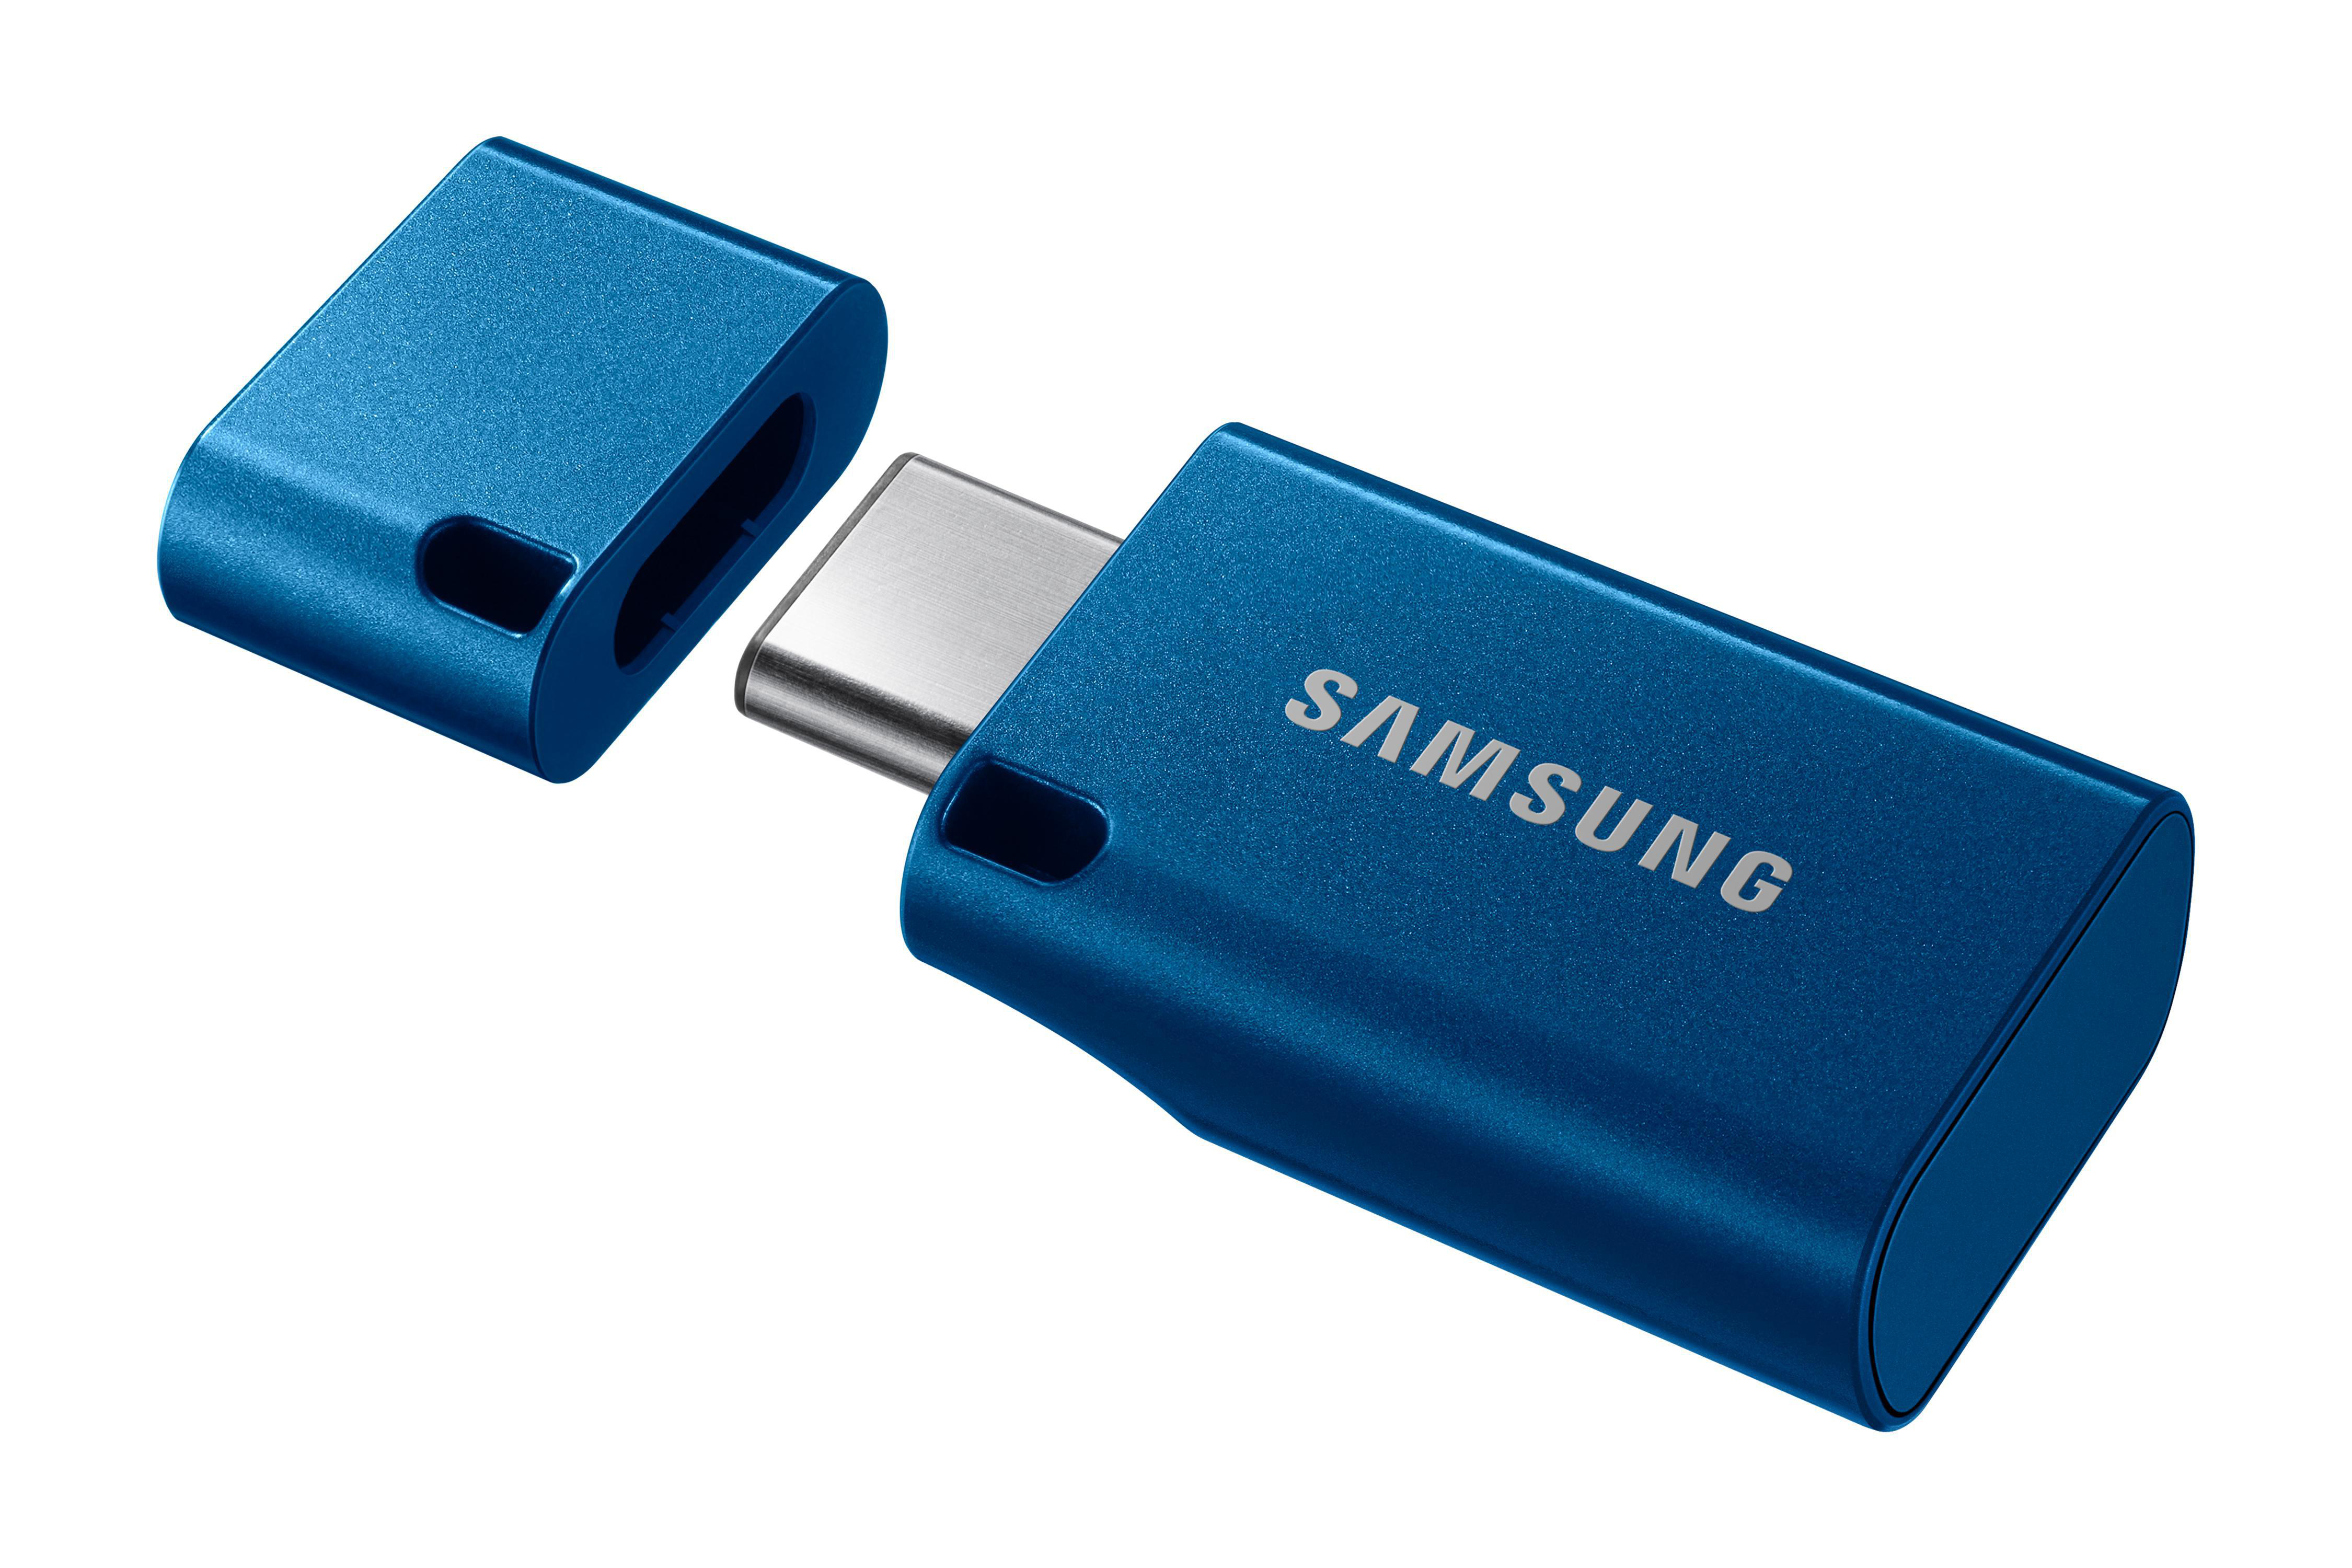 SAMSUNG MUF-64DA/APC GB, 64 MB/s, USB-Stick, Blau 300